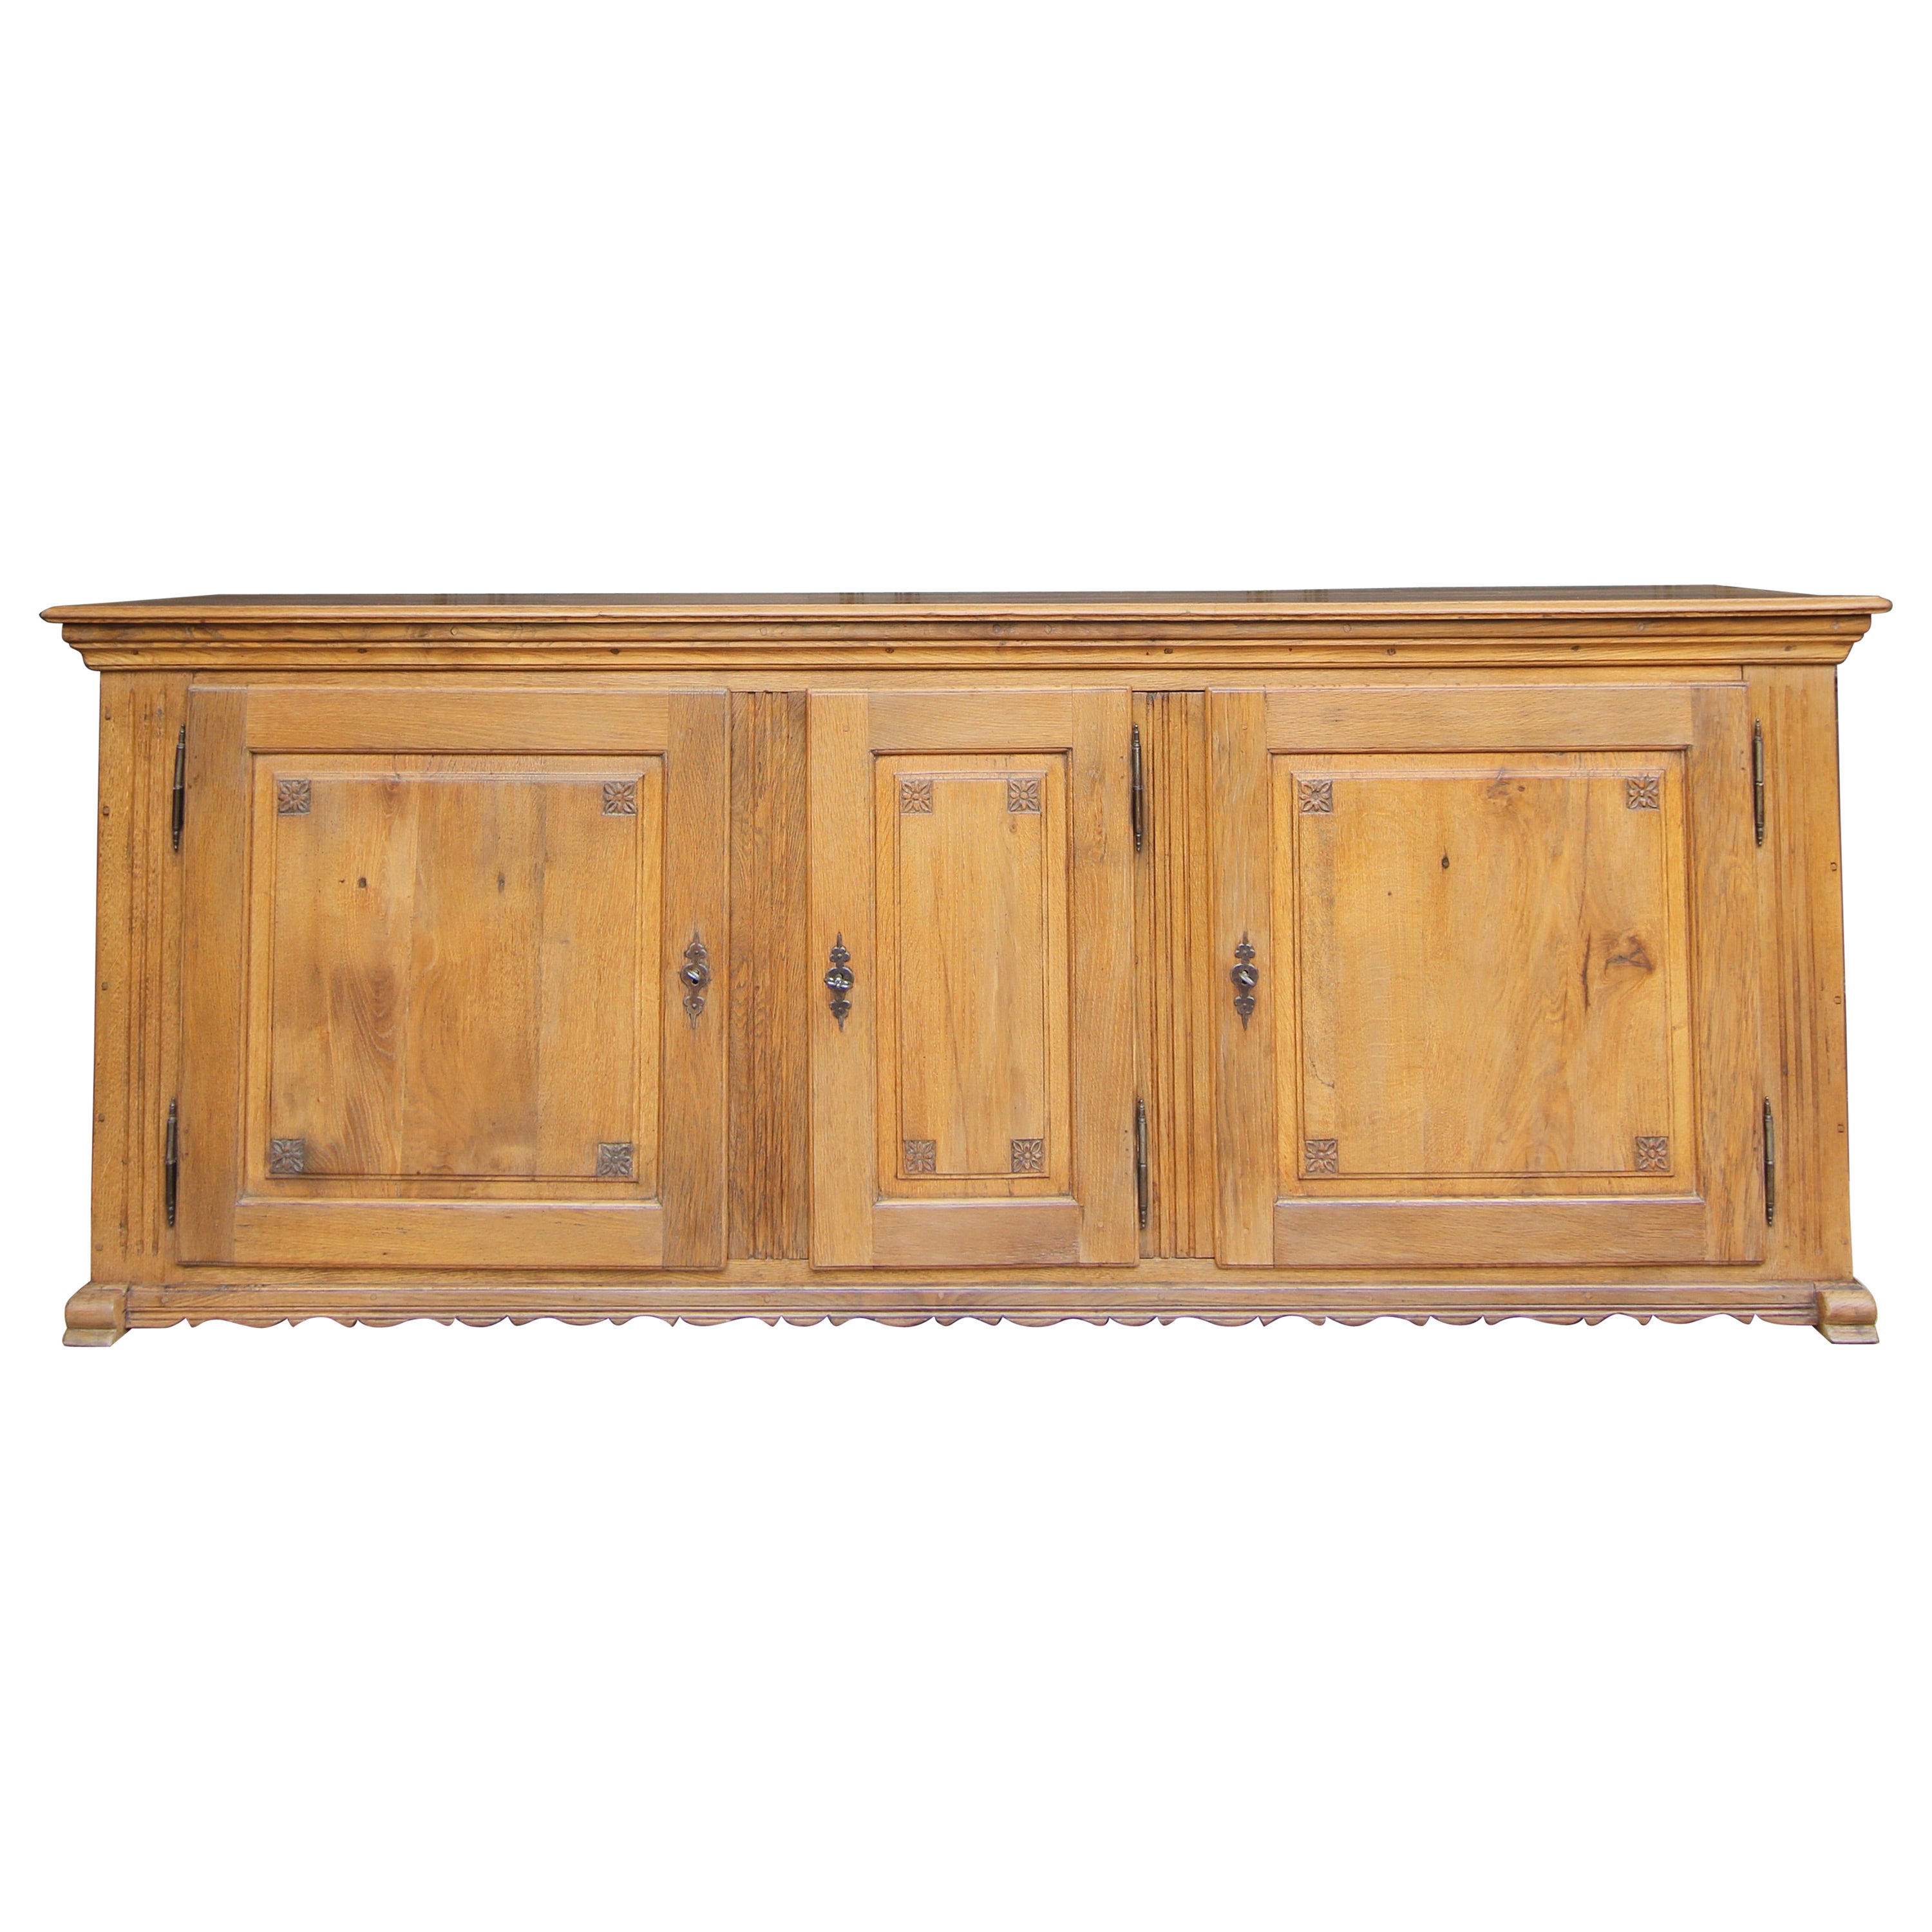 German Provincial Louis XVI Style Sideboard made of Oak For Sale